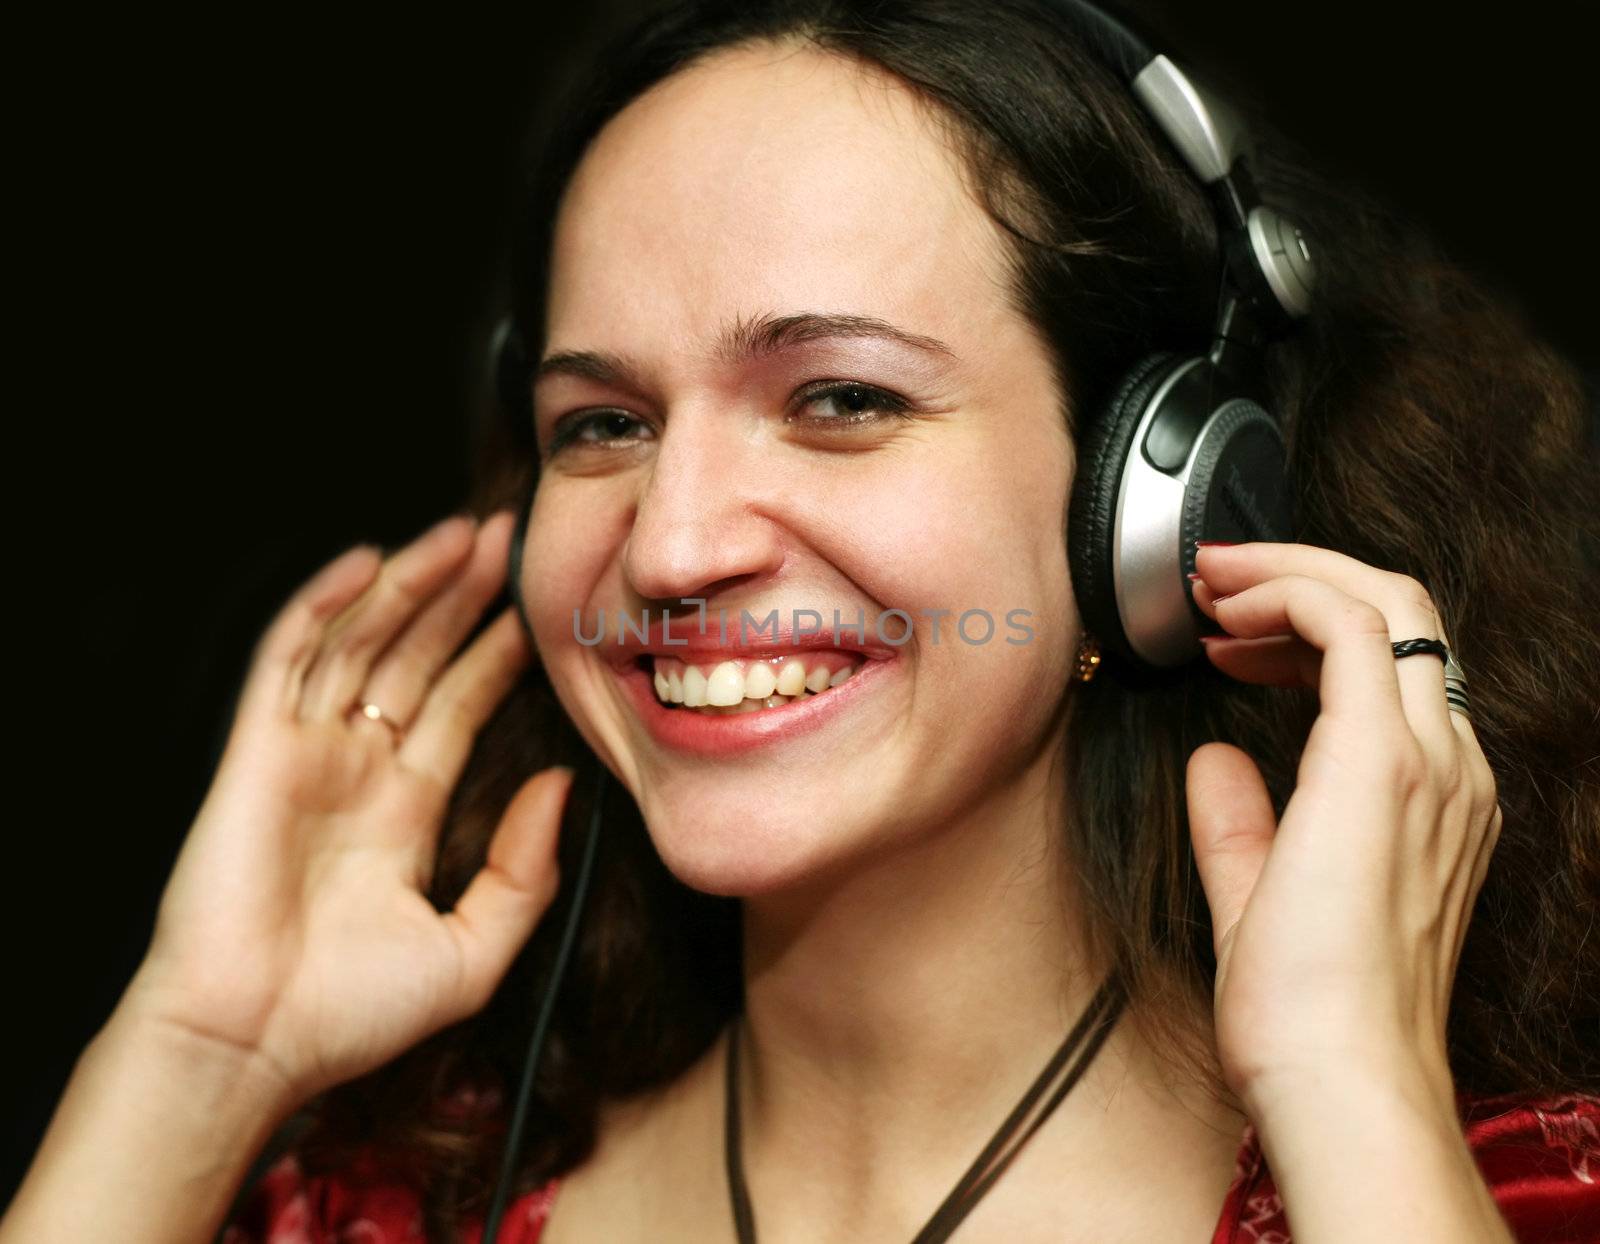 The girl in headphones in a night club